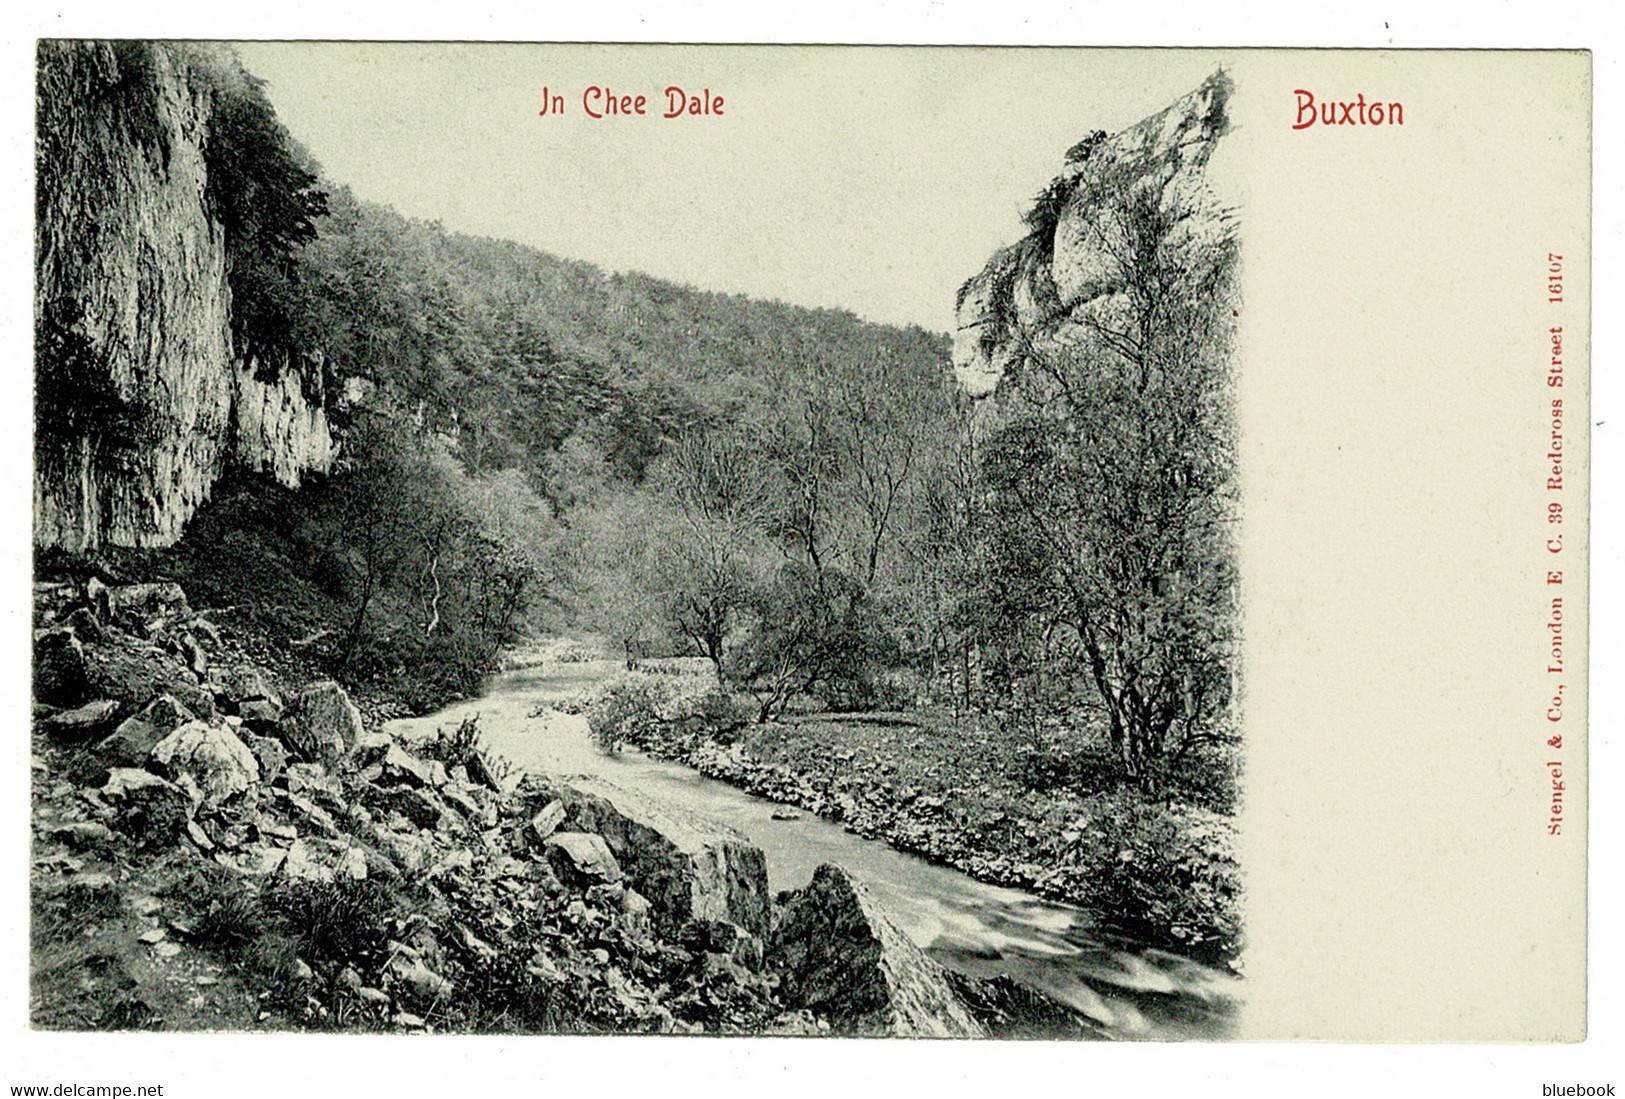 Ref 1457 - Early Stengel Postcard - In Chee Dale Buxton - Derbyshire Peak District - Derbyshire